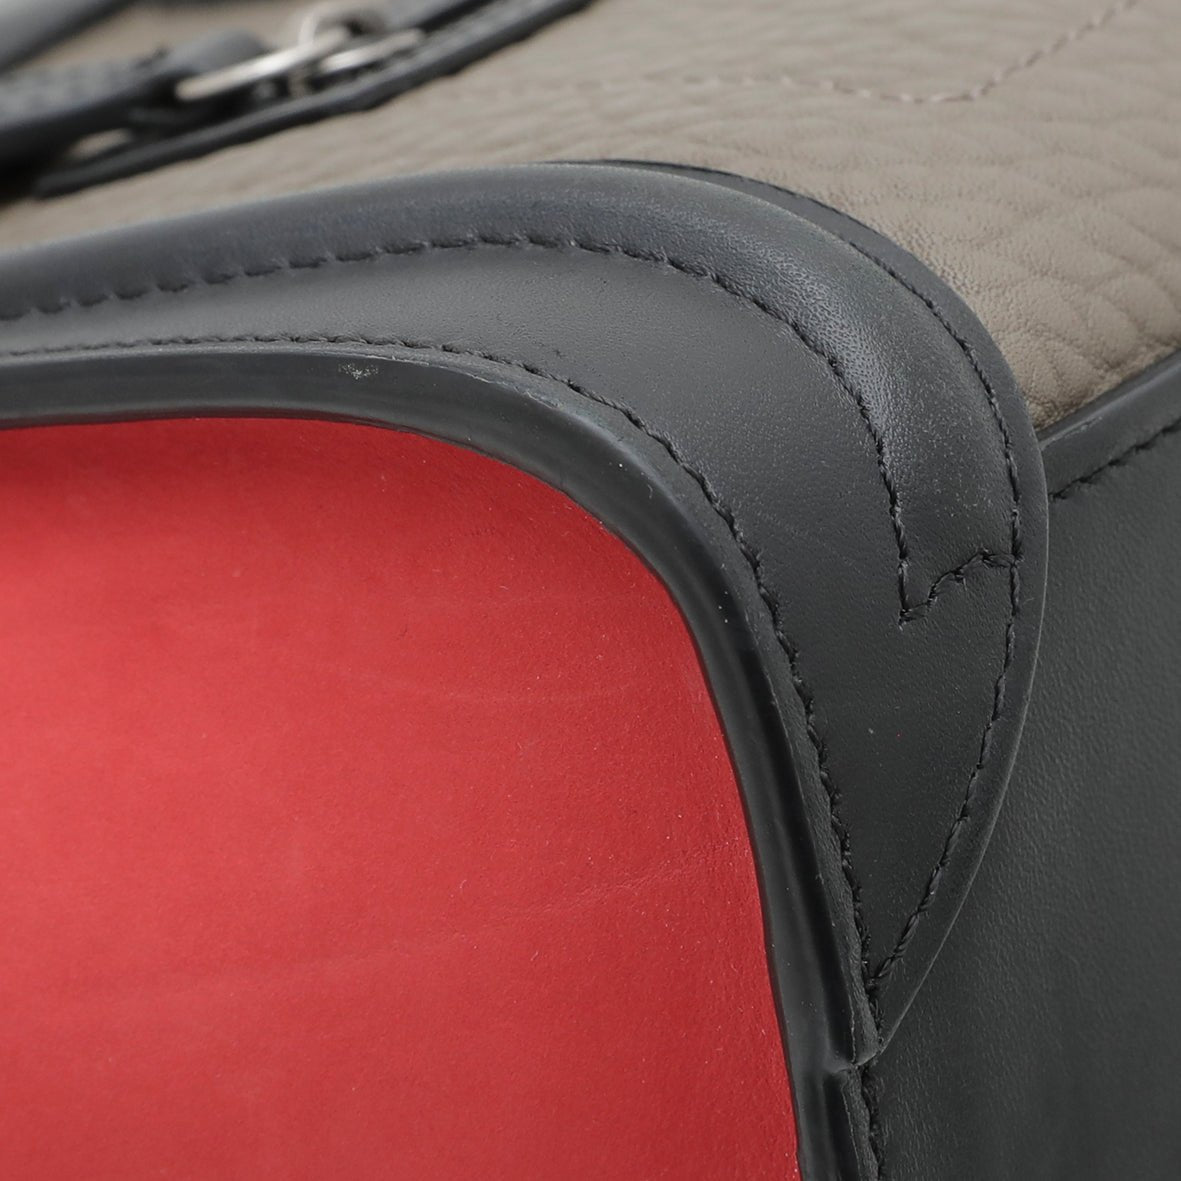 thecloset.uae - Celine Tricolor Bullhide Nano Luggage Bag | The Closet